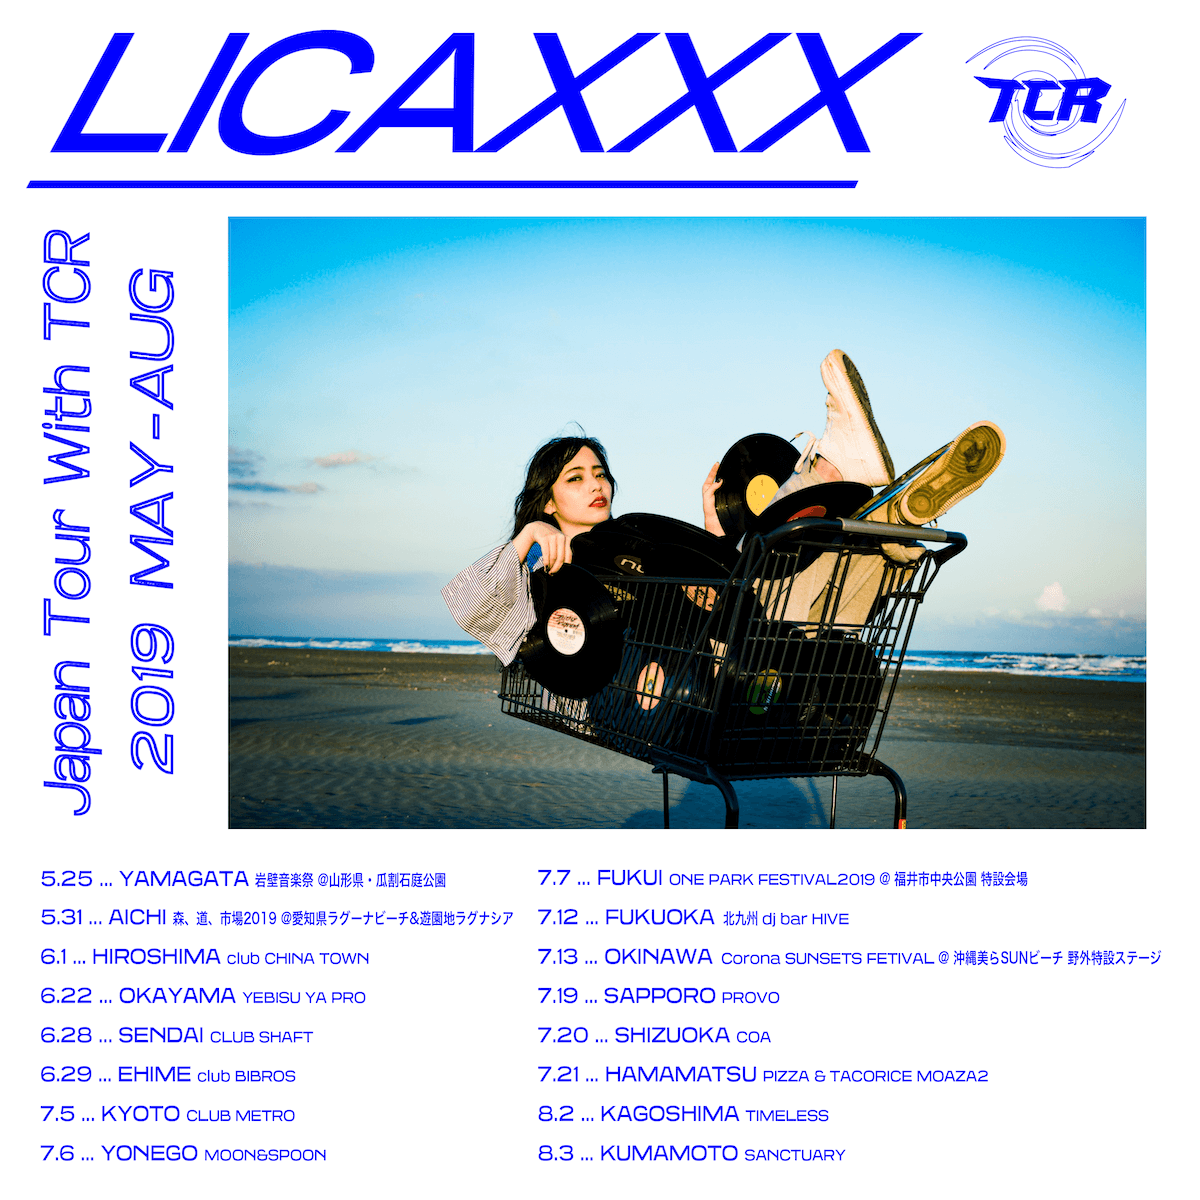 Licaxxx Japan Tour With TCR